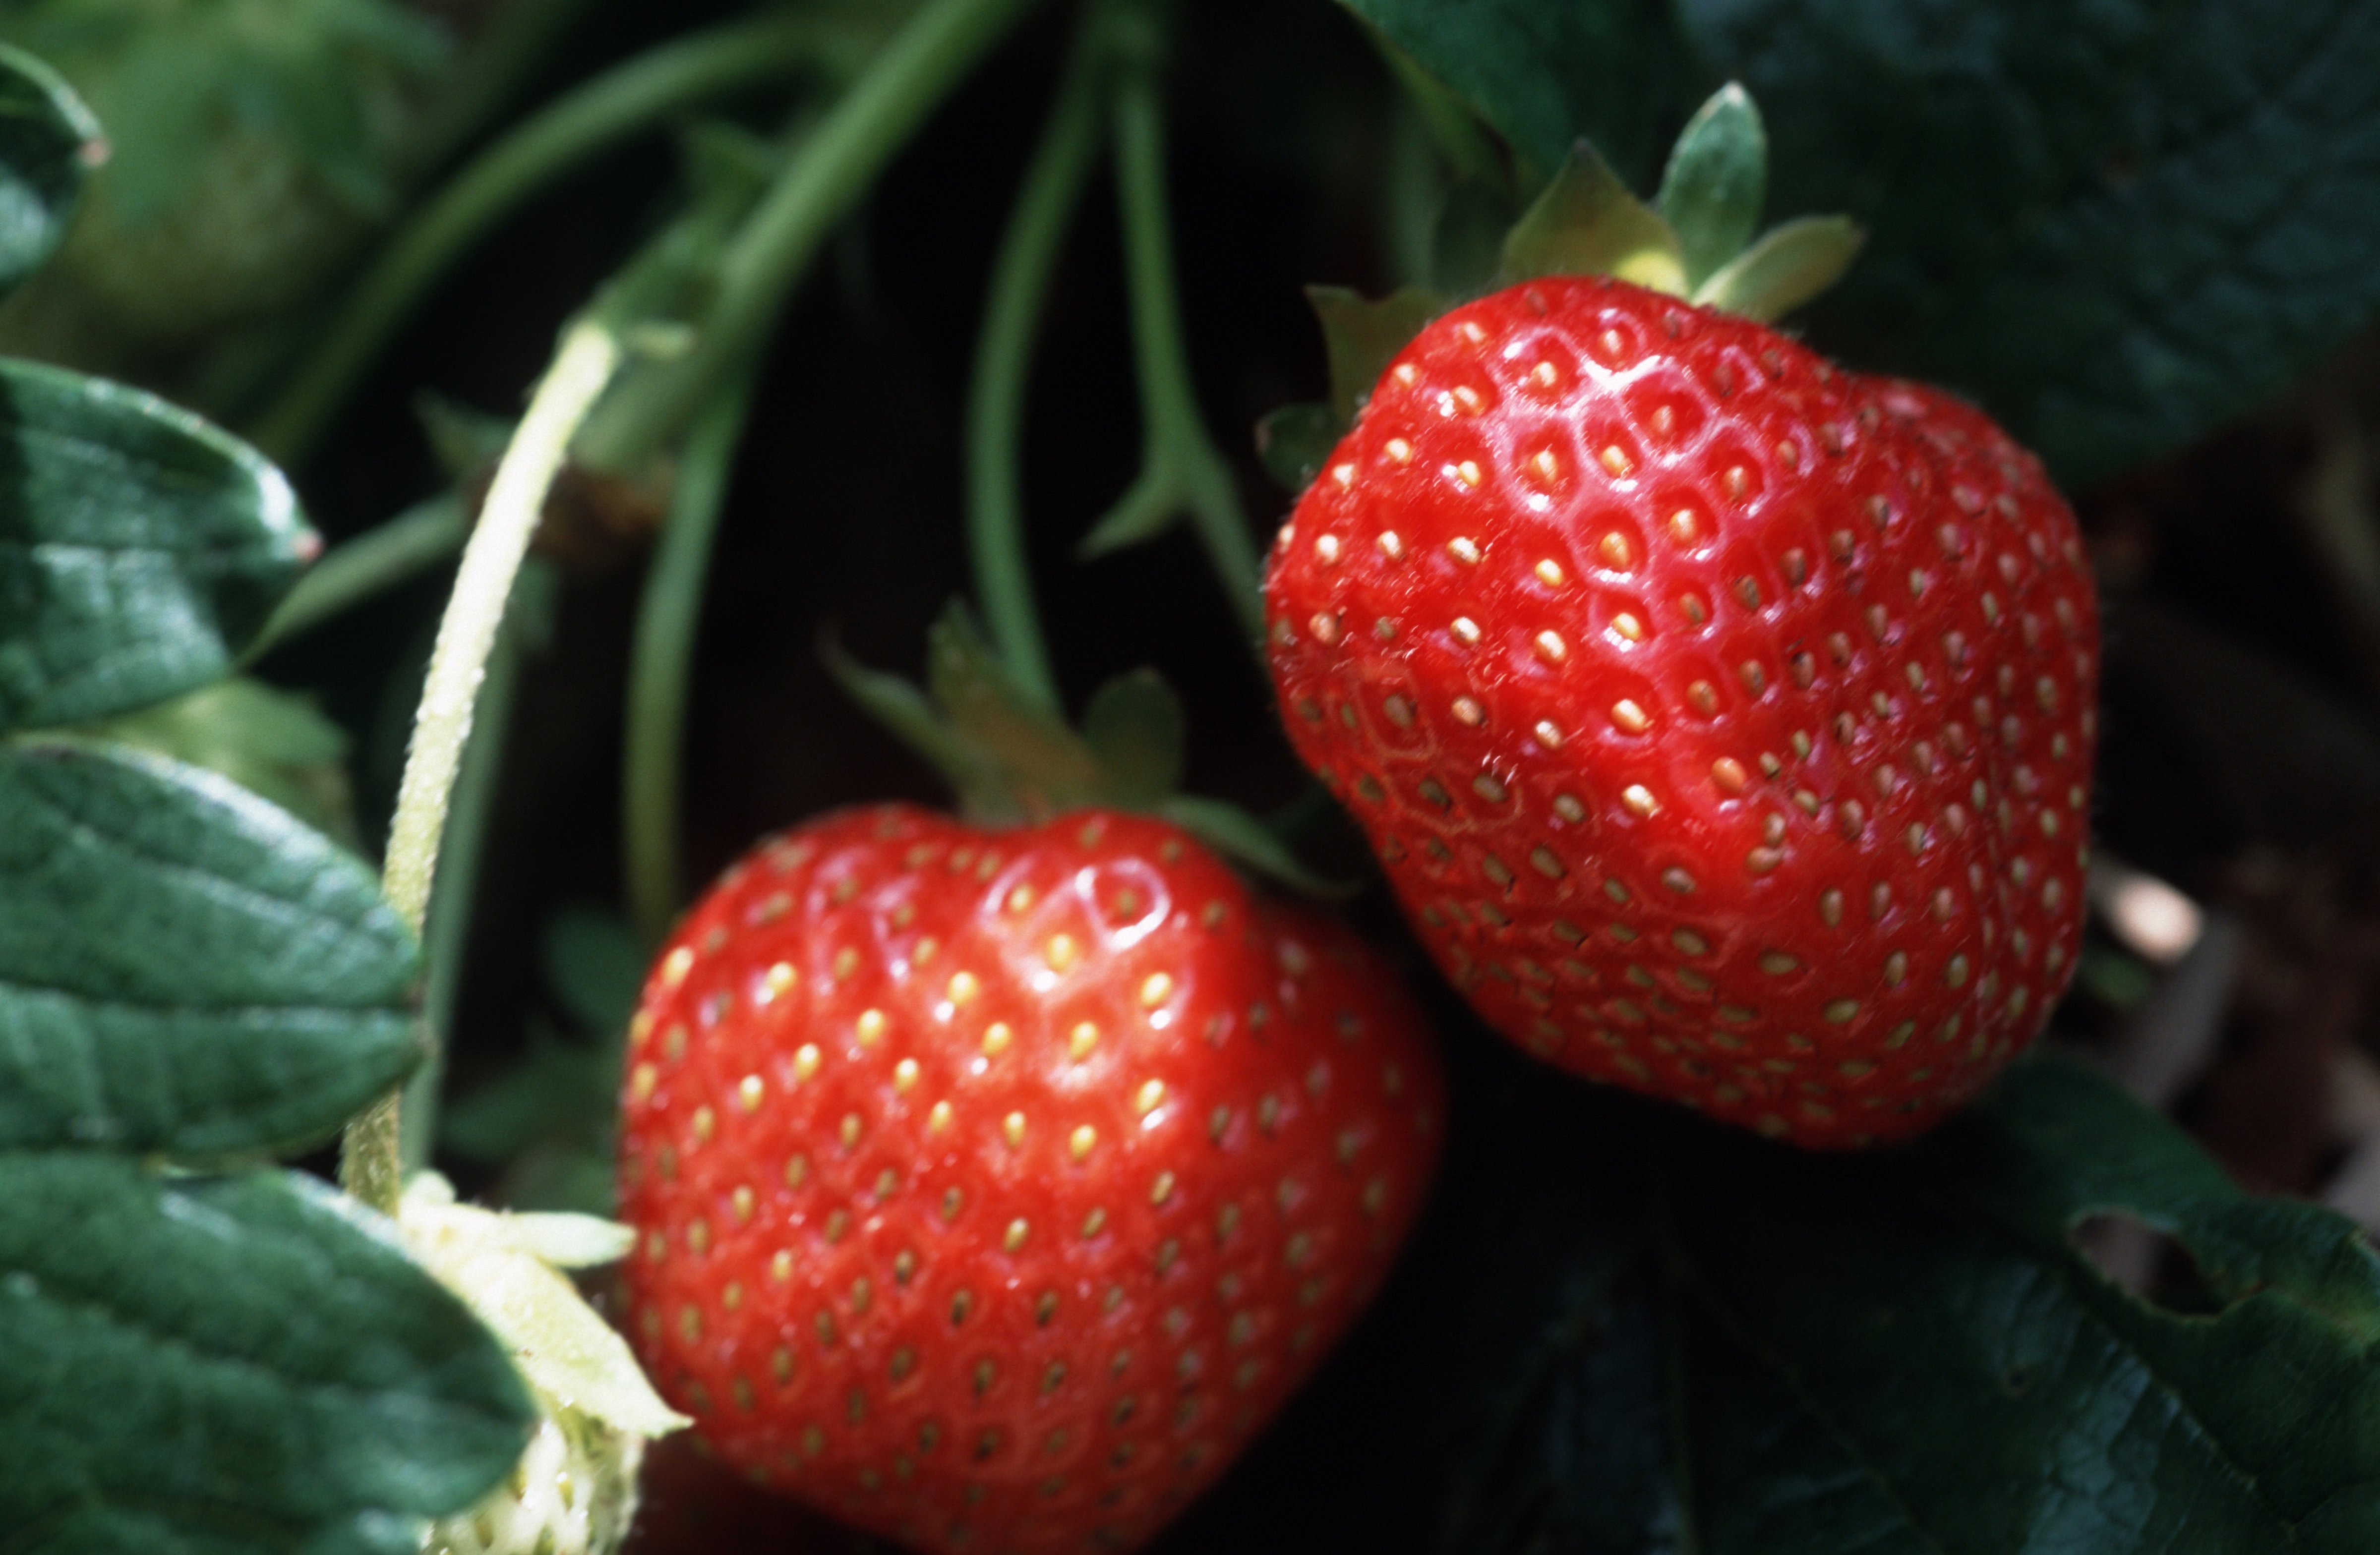 Summer strawberries at a farm in Tasmania. (Leisa Tyler&mdash;LightRocket/Getty Images)